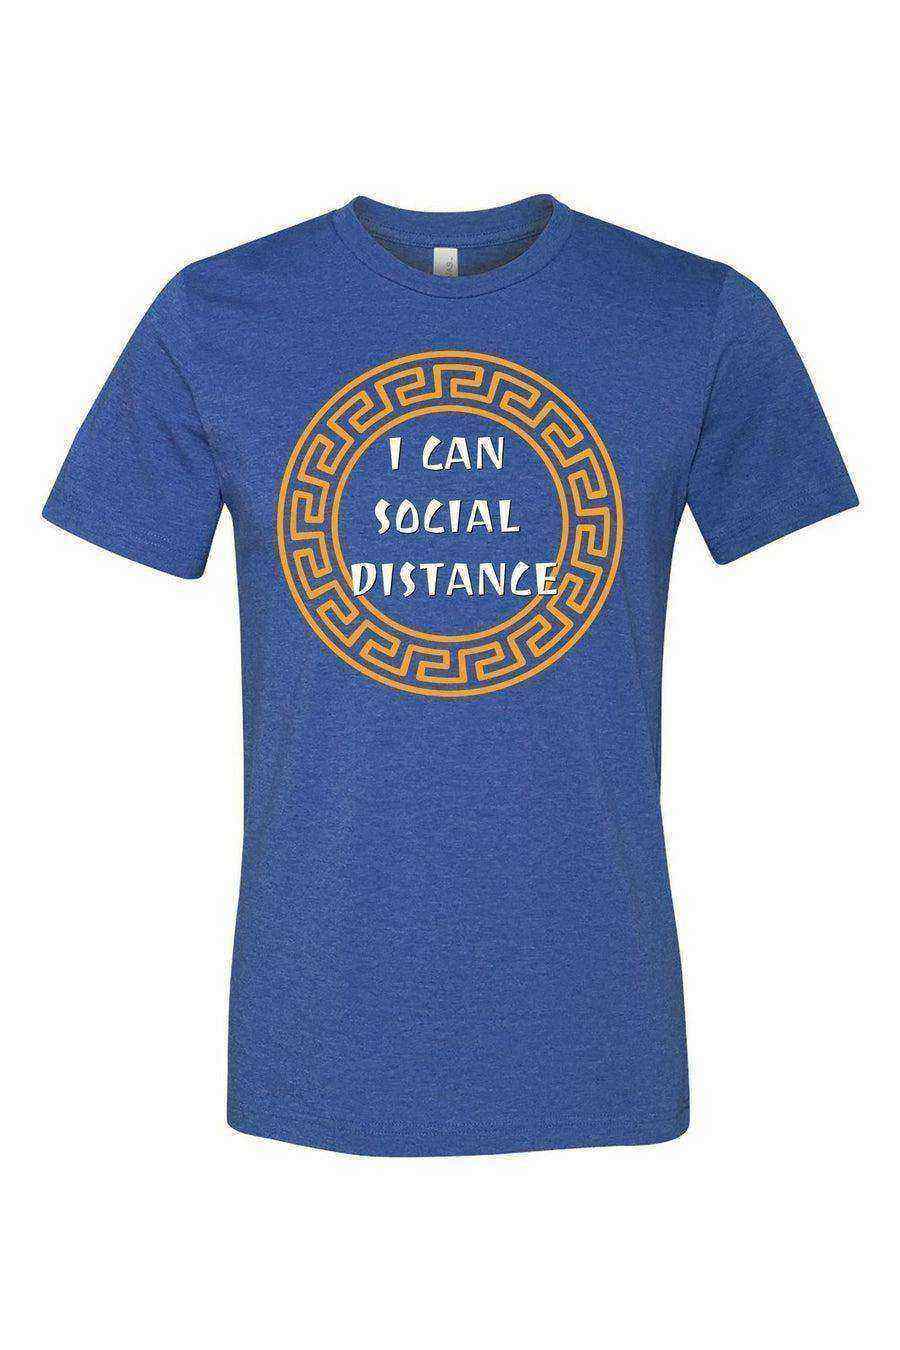 Womens | I Can Social Distance Shirt | Hercules | Social Distance - Dylan's Tees